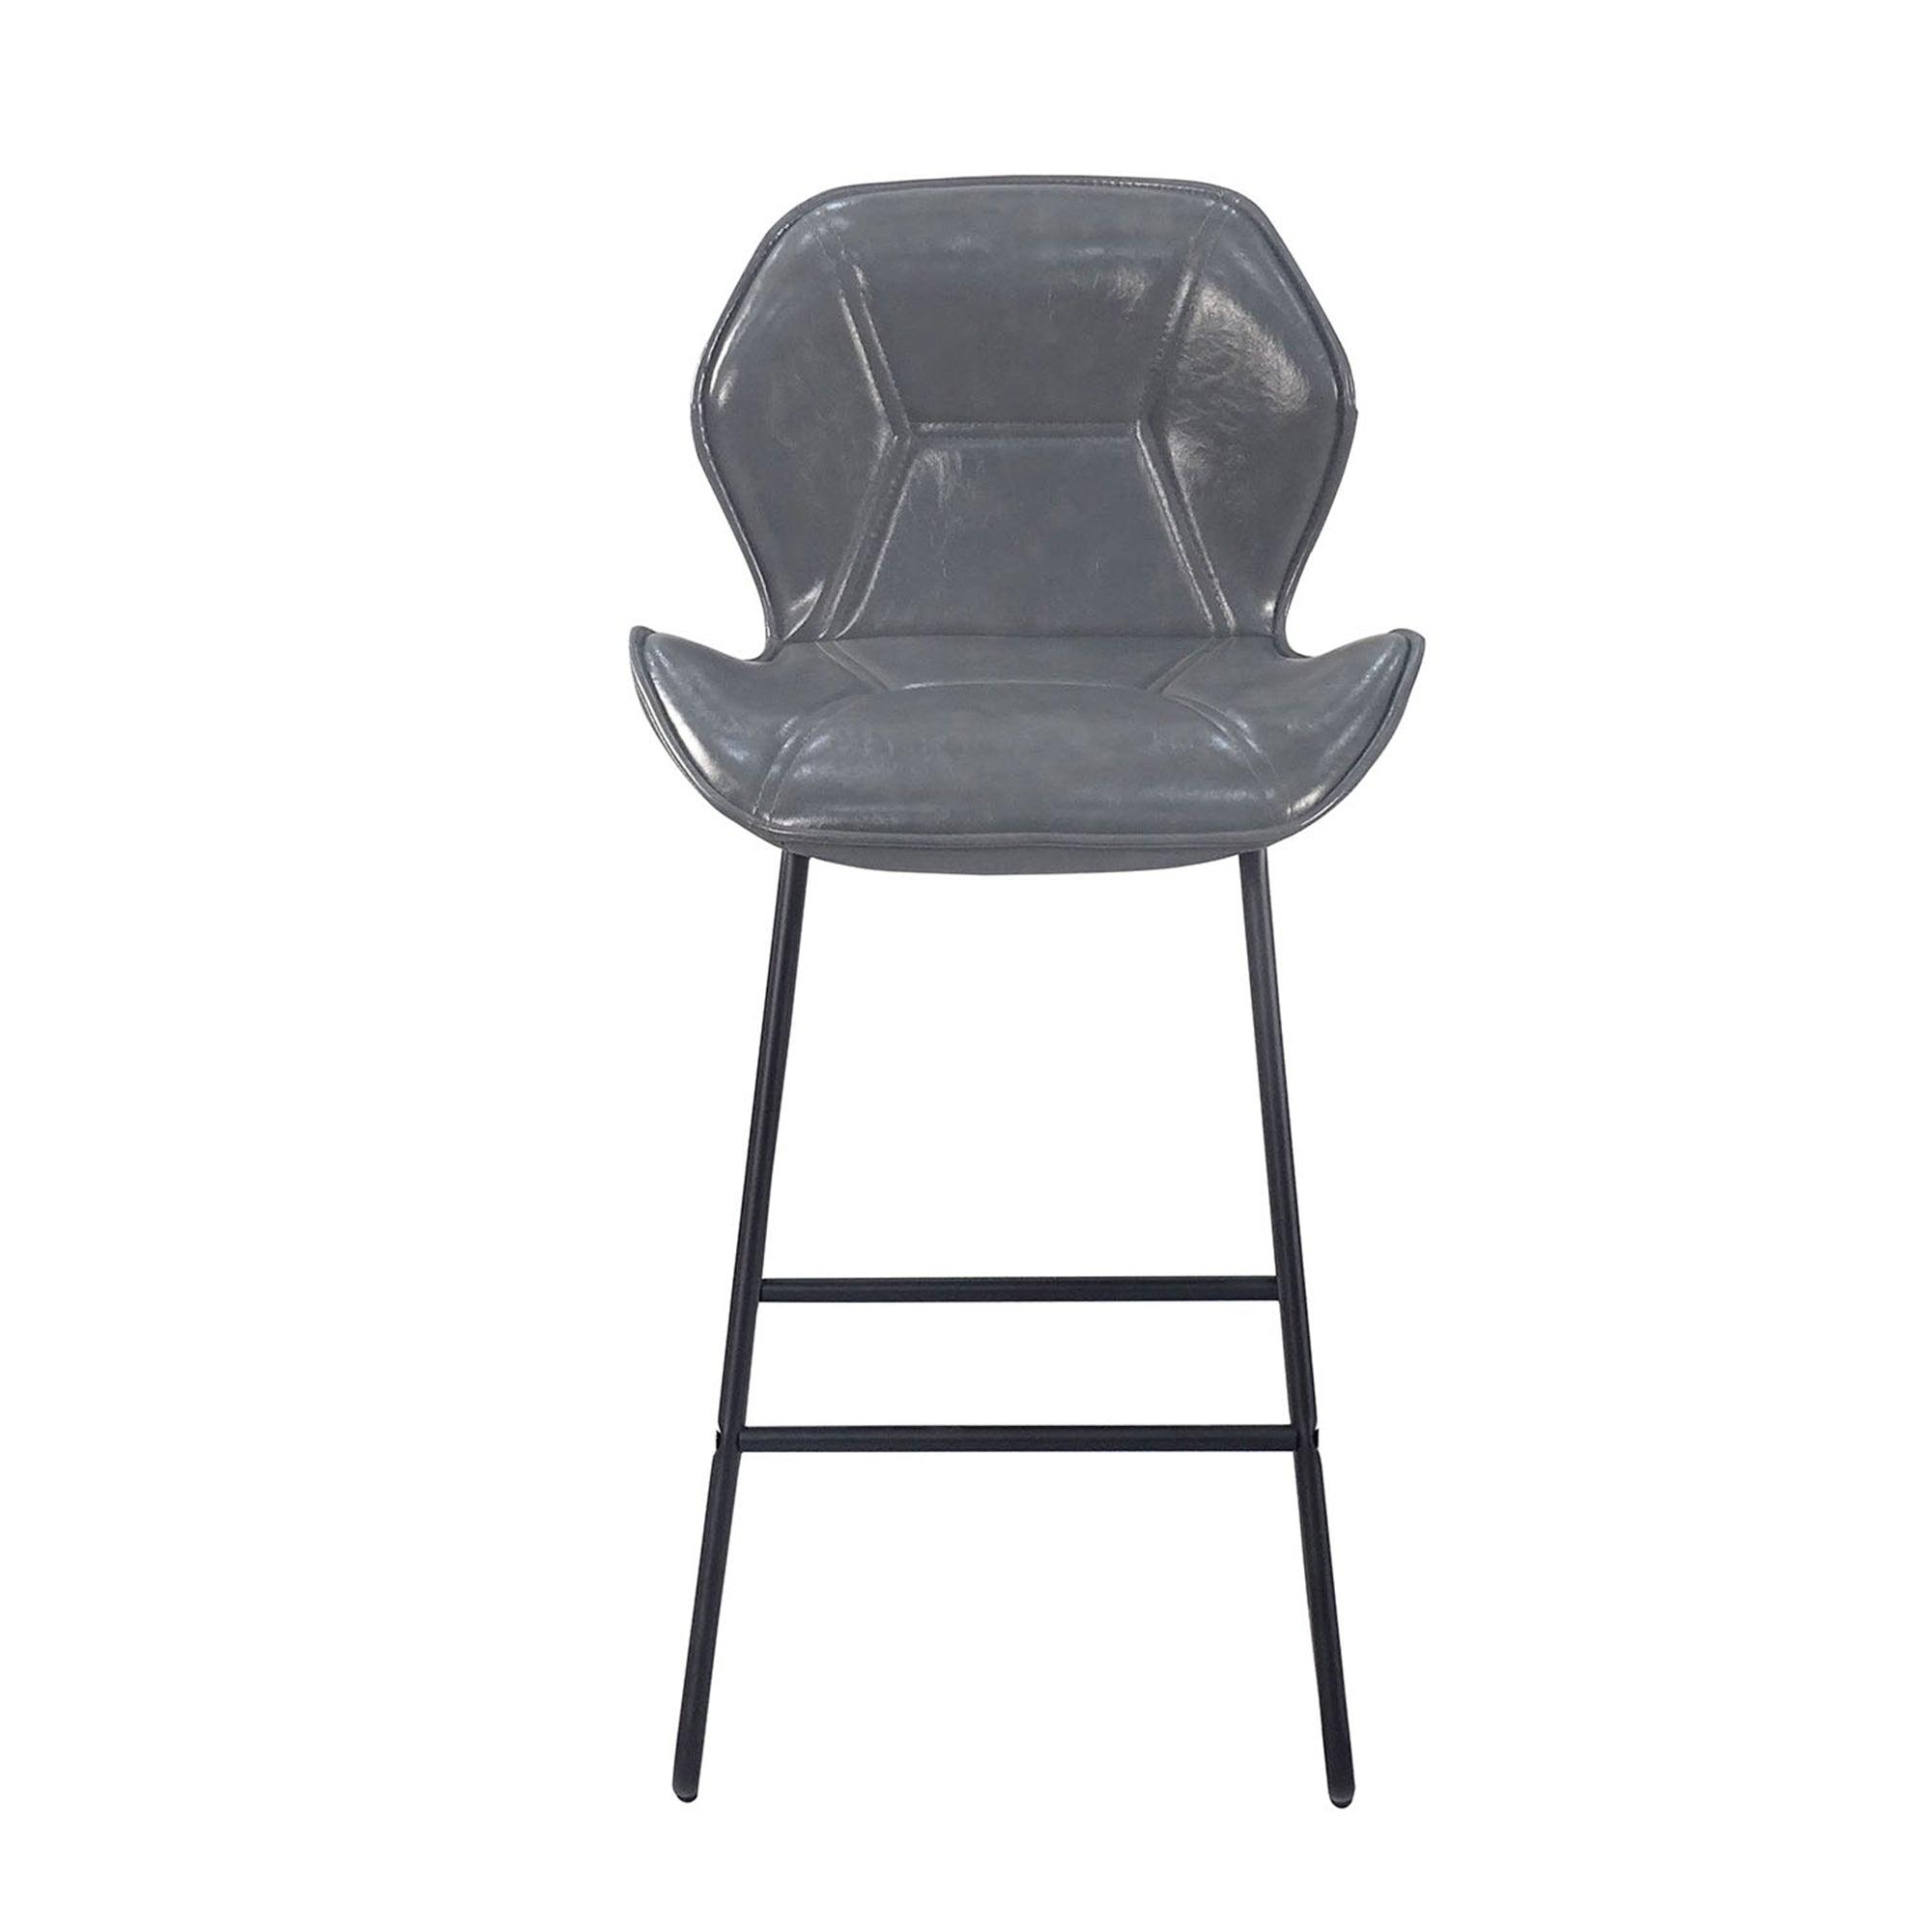 Round bar stool set with shelf, upholstered stool with backrest